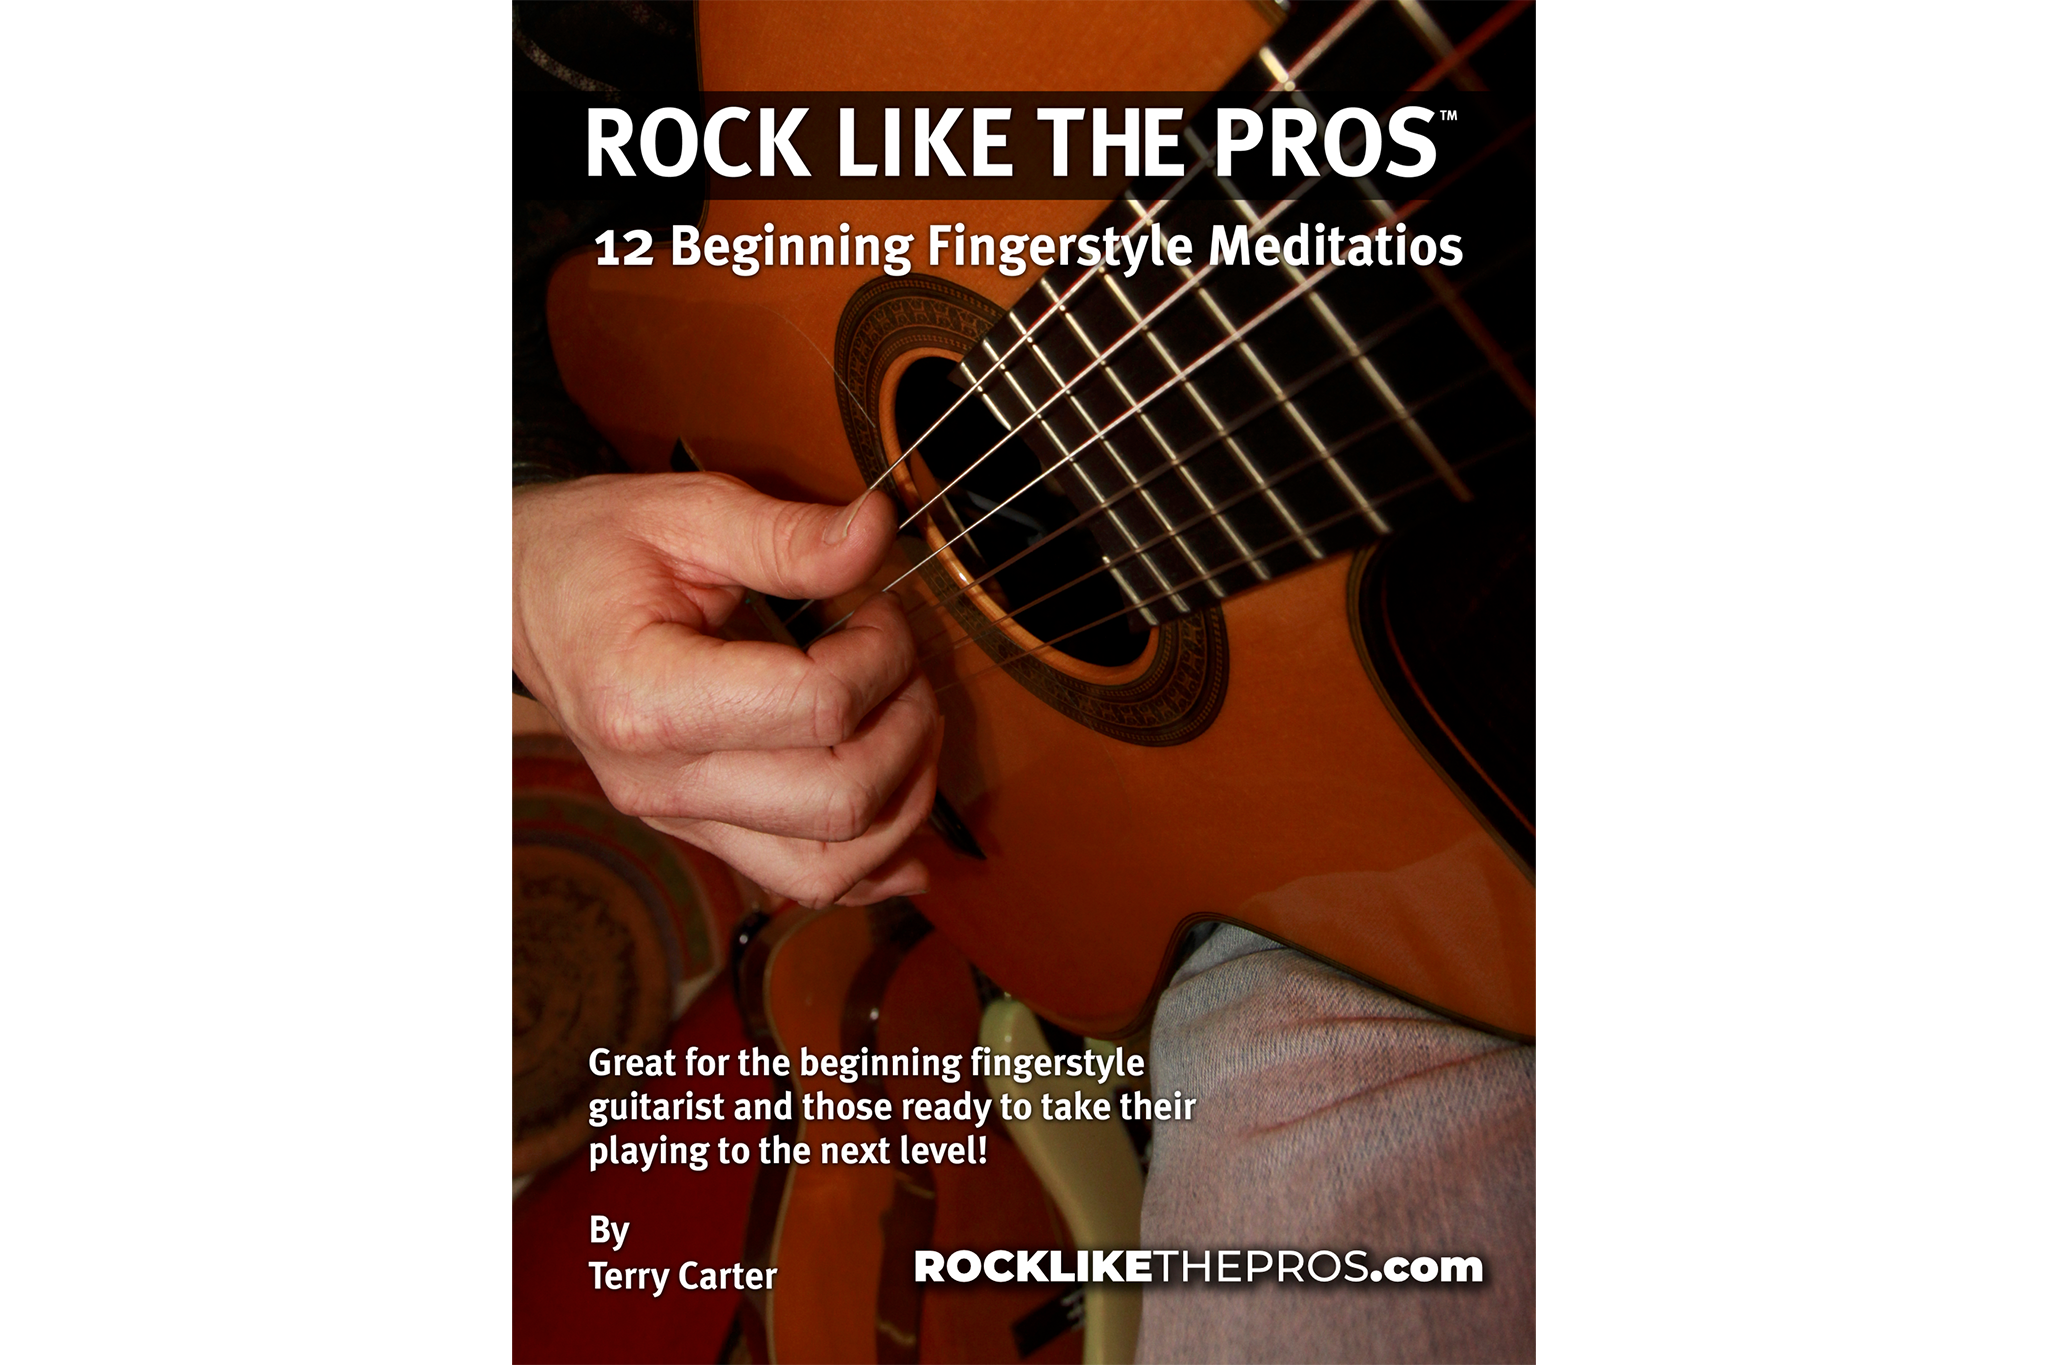 Rock Like The Pros 12 Beginning Guitar Fingerstyle Mediatios